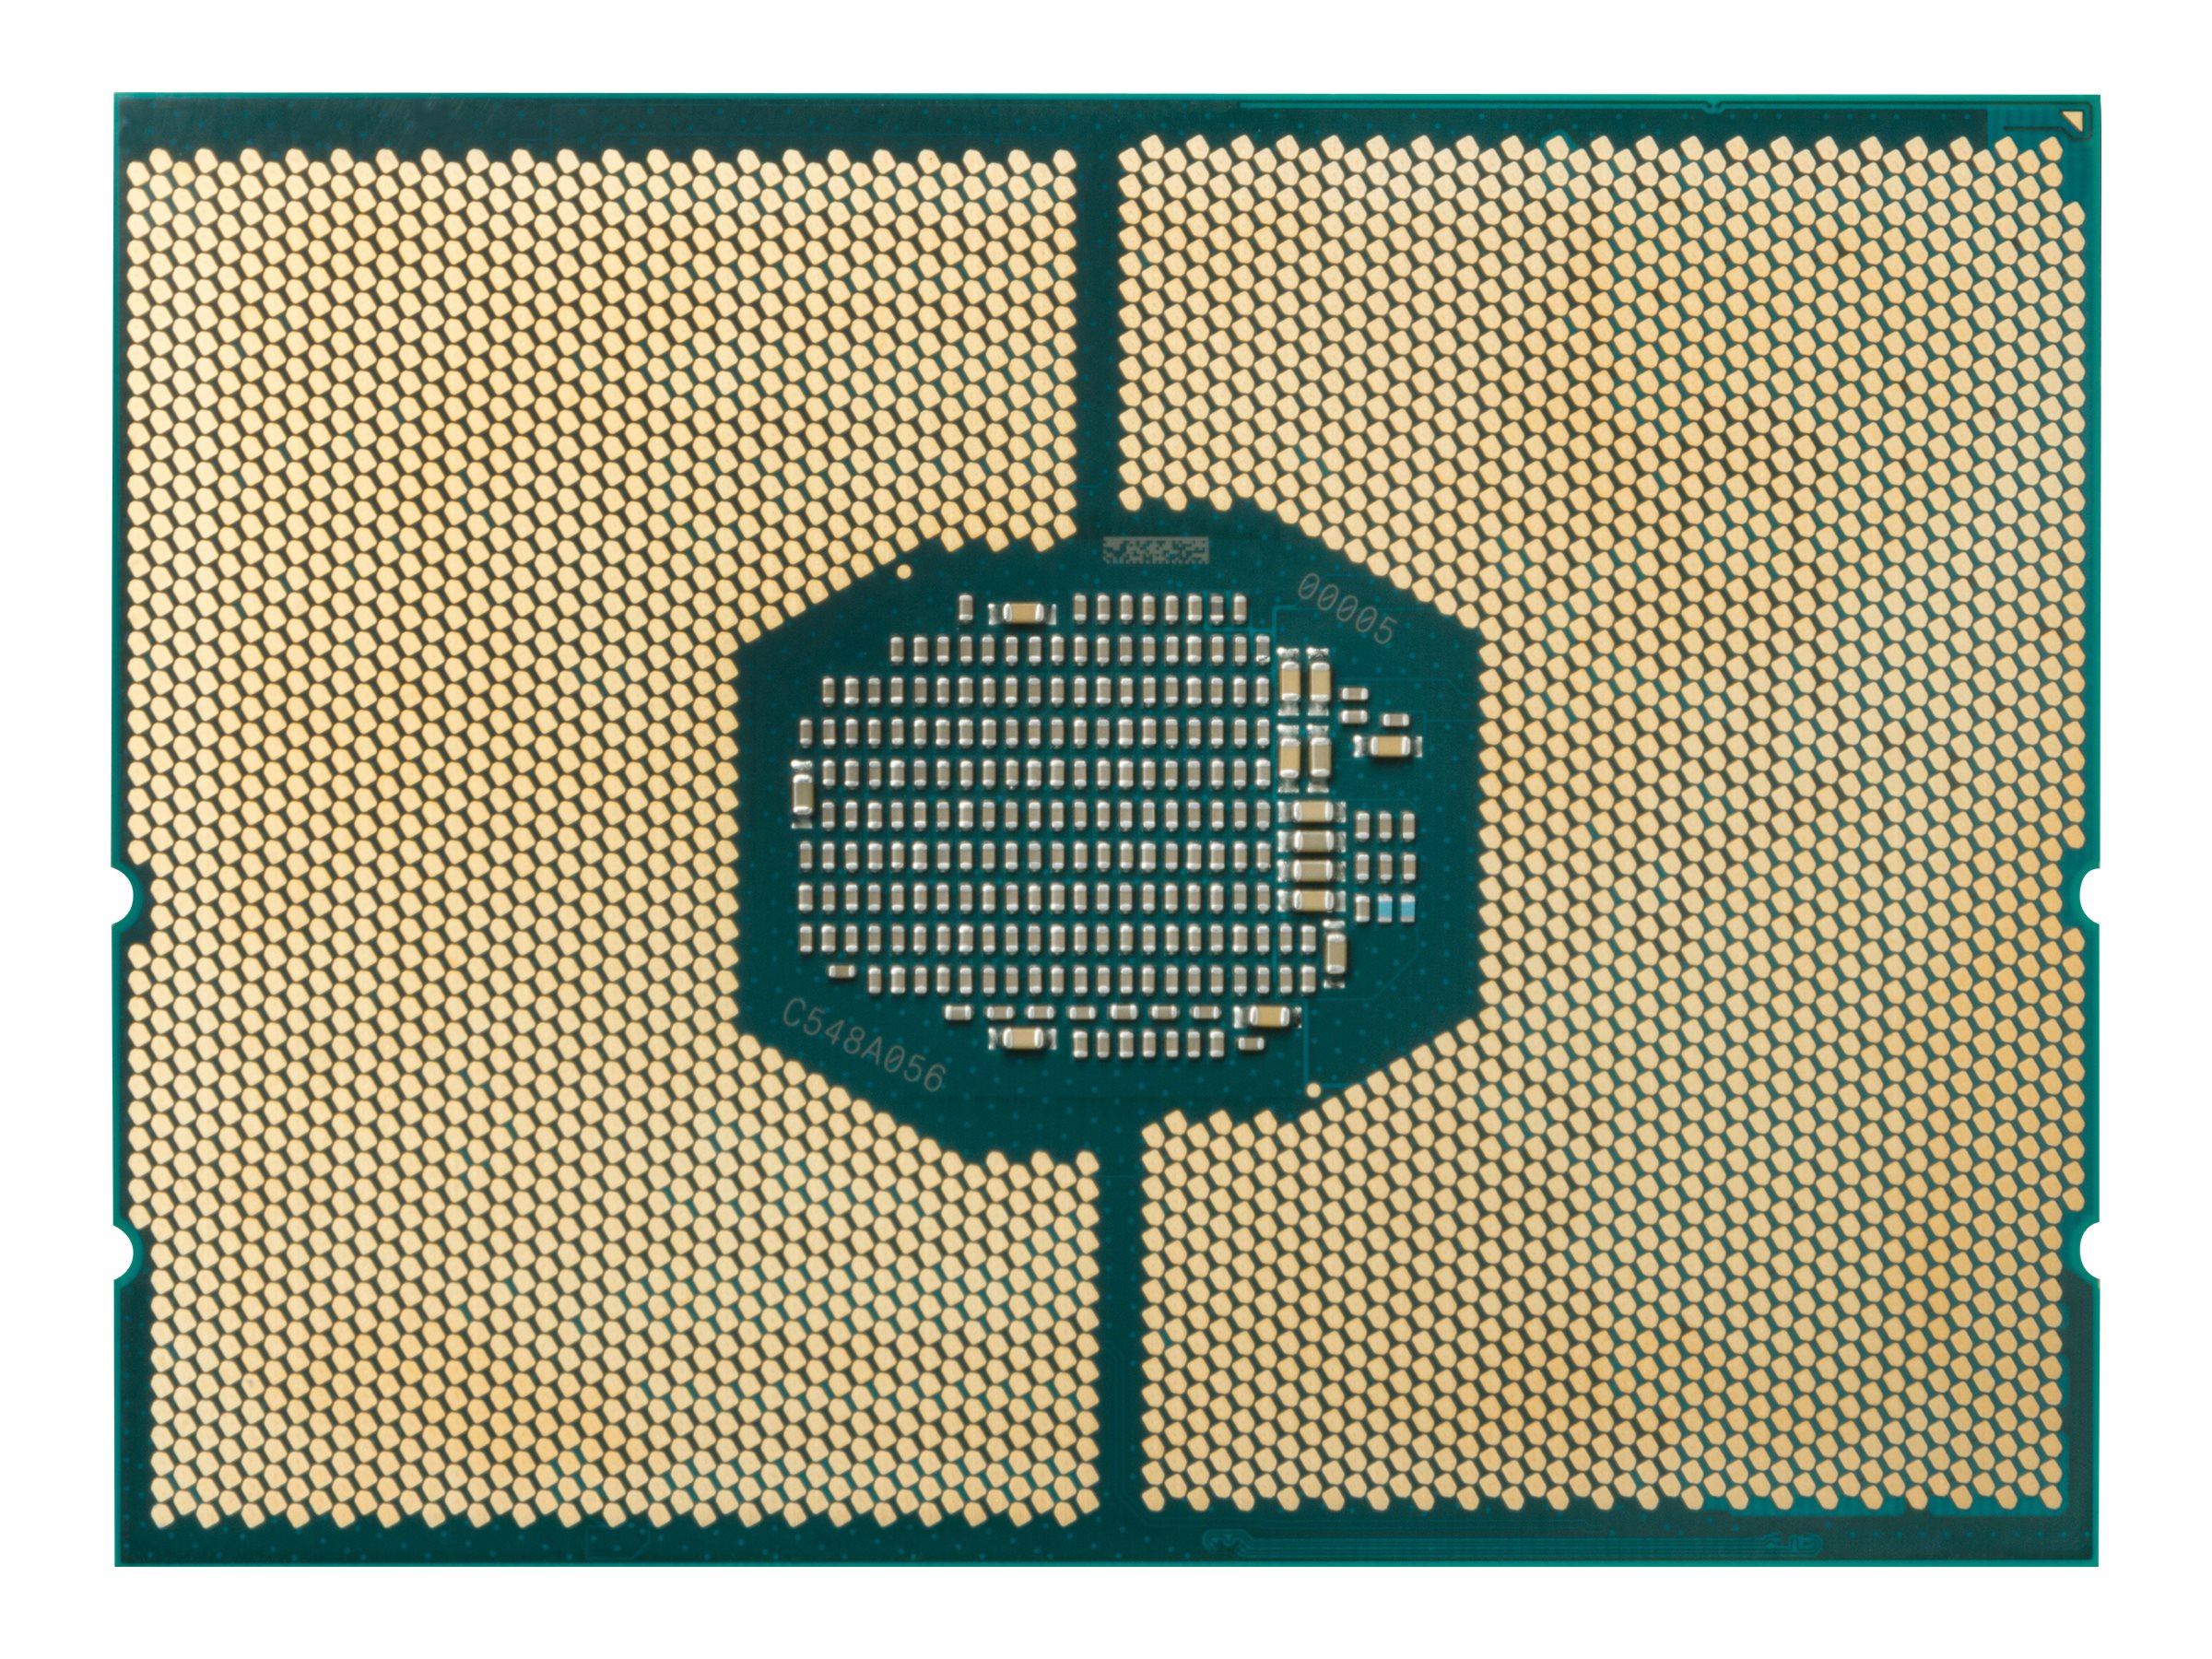 Intel Xeon Silver 4116 - 2.1 GHz - 12 Kerne - 24 Threads - 16.5 MB Cache-Speicher - LGA3647 Socket